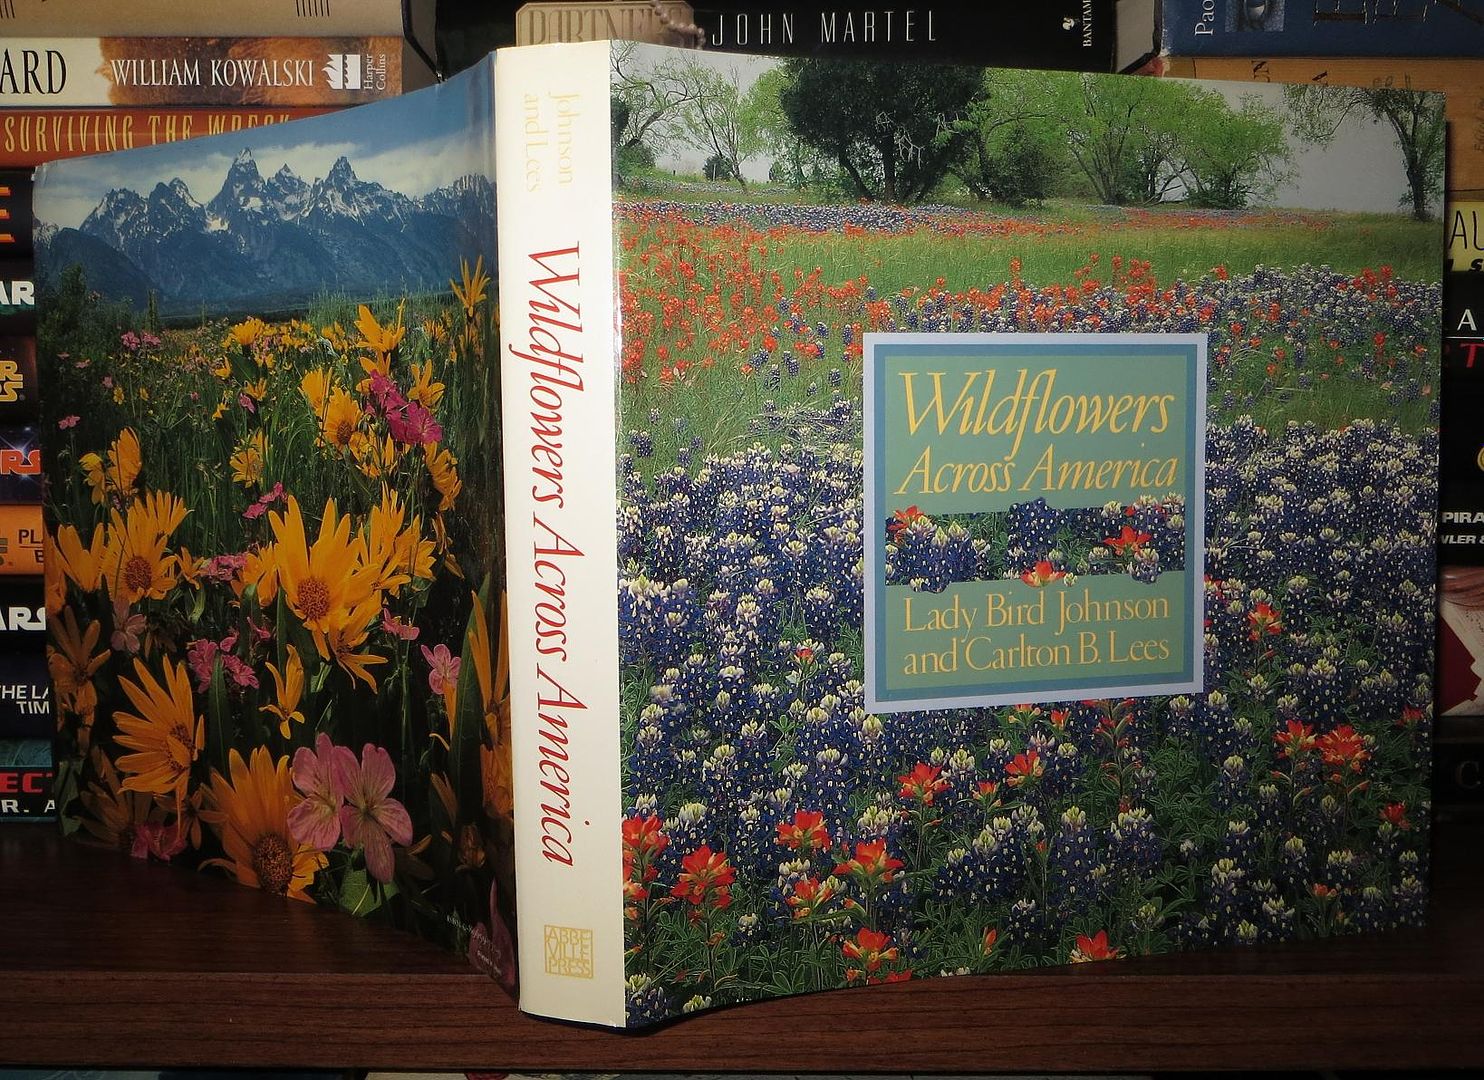 JOHNSON, LADY BIRD & CARLTON B. LEES & LES LINE - Wildflowers Across America